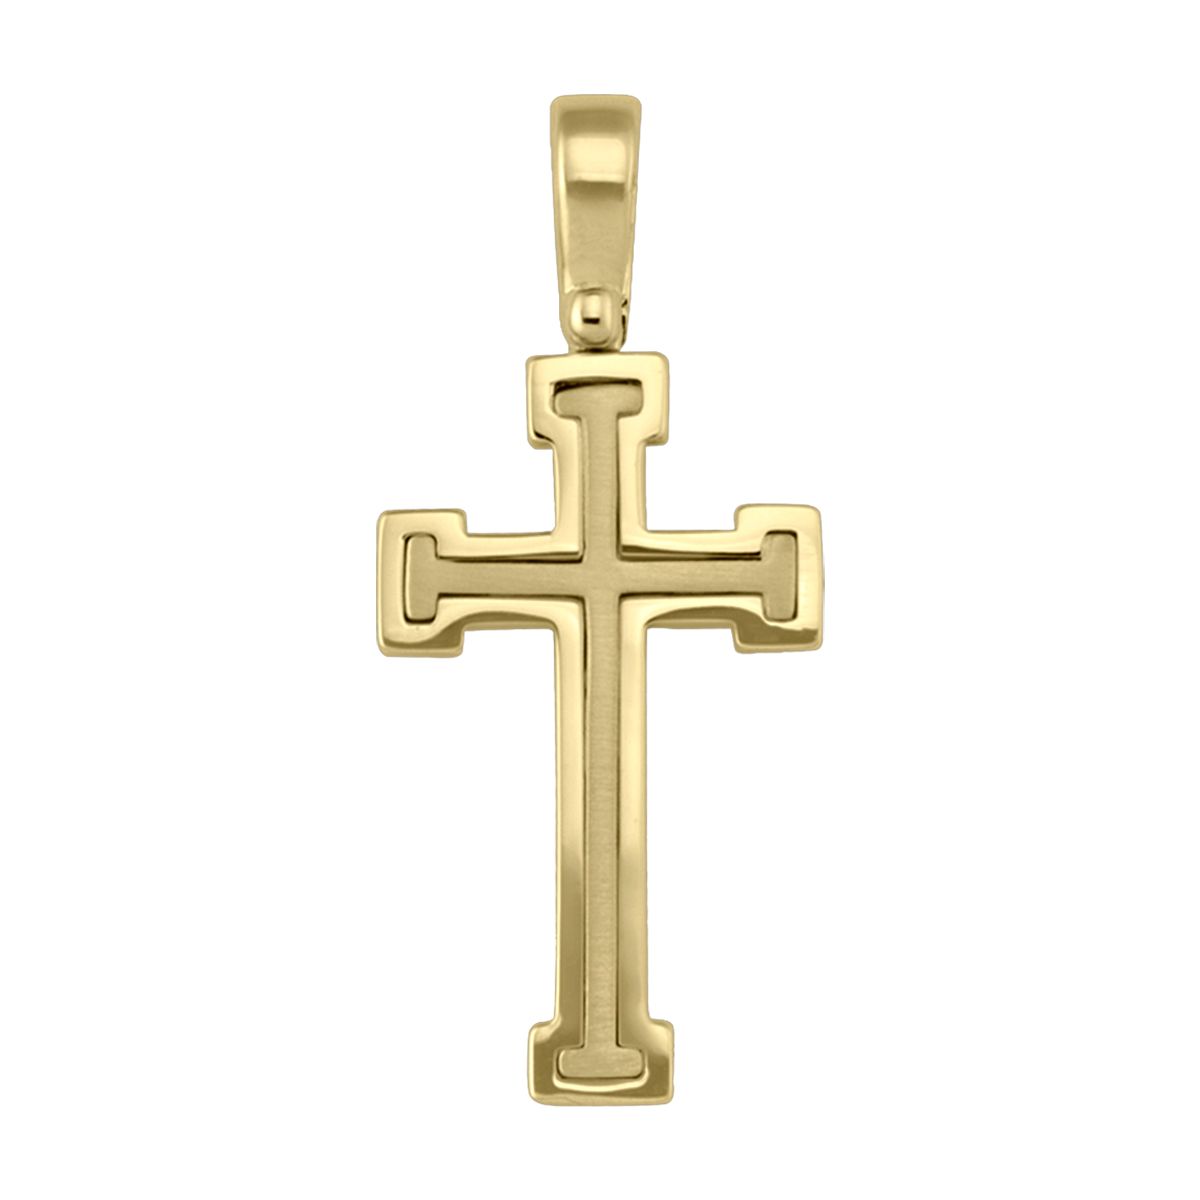 X0315, Gold Cross, Crossbar Design